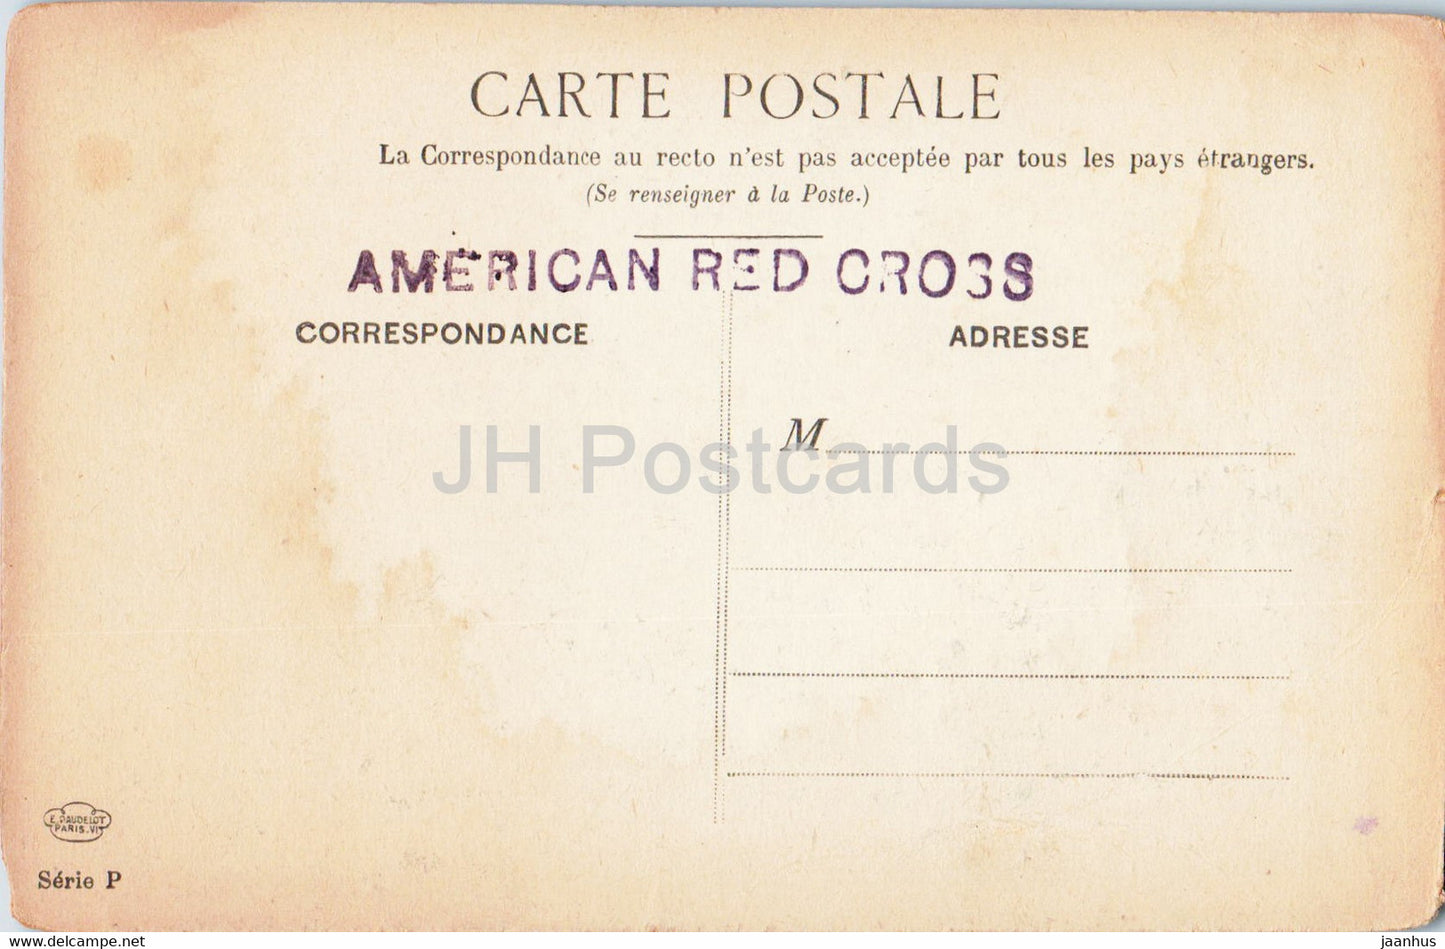 Paris - Notre Dame - Le Tropeau des Monstres - illustration - American Red Cross - old postcard - France - unused